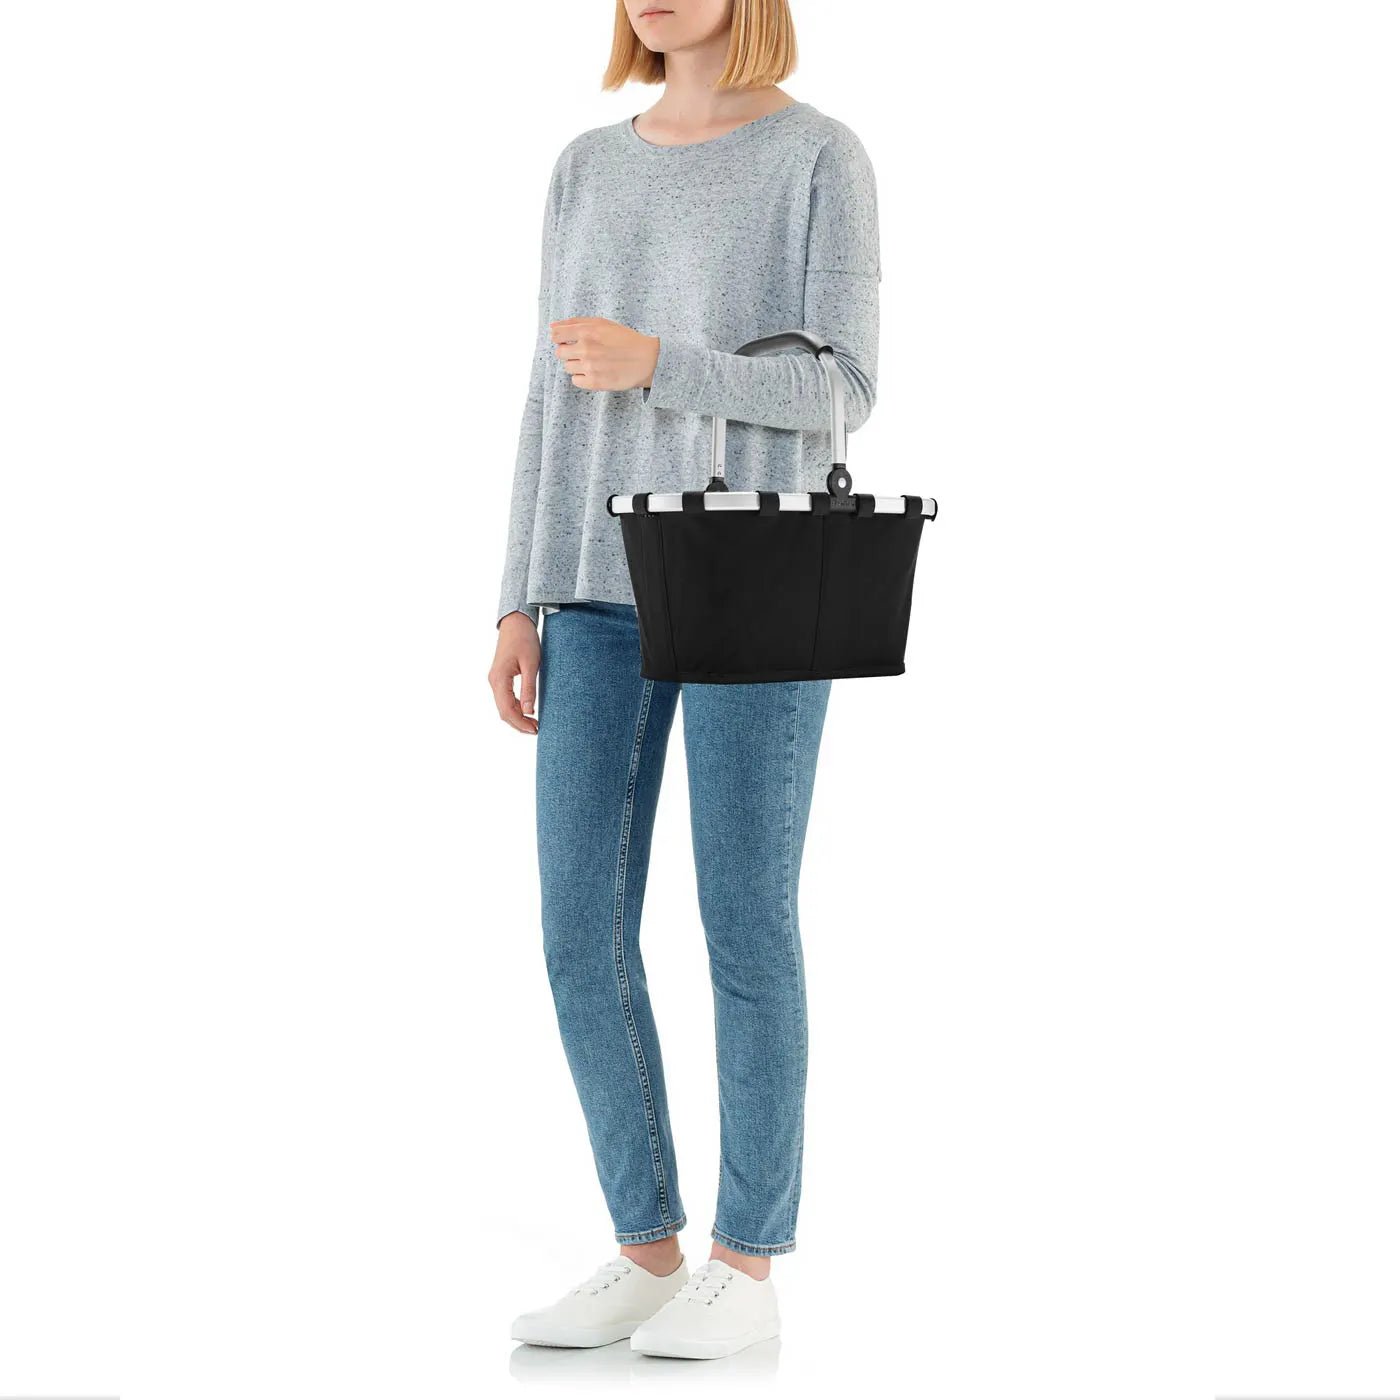 Reisenthel Shopping Carrybag XS Kinder-Einkaufskorb 33 cm - Frame Twist Coffee